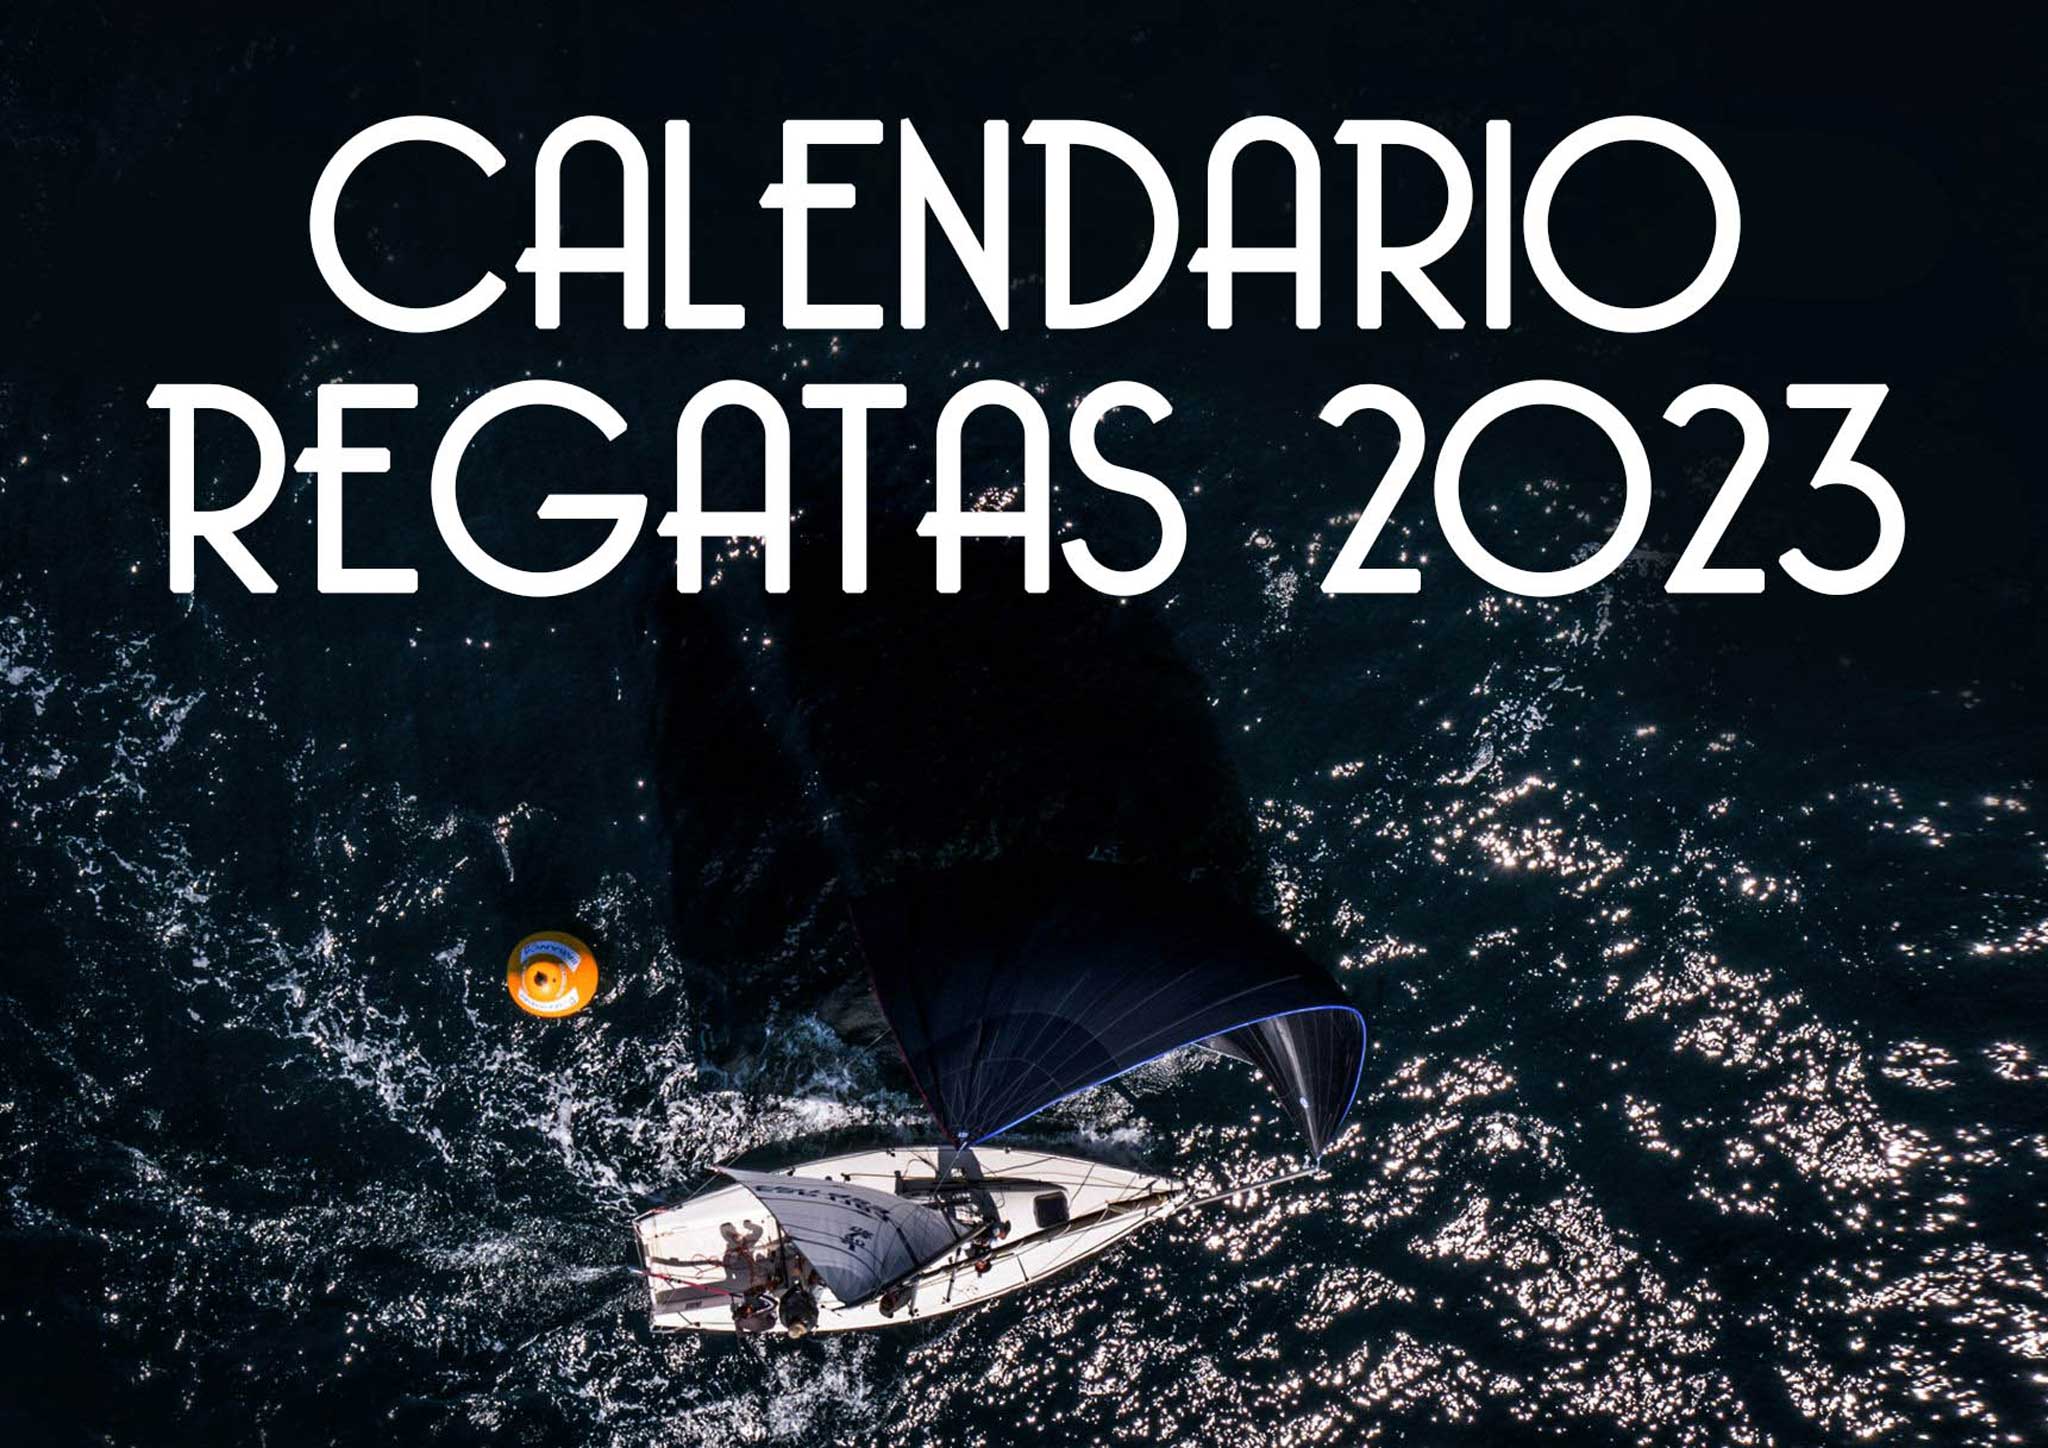 Regattas Calendar · Monte Real Club de Yates Baiona